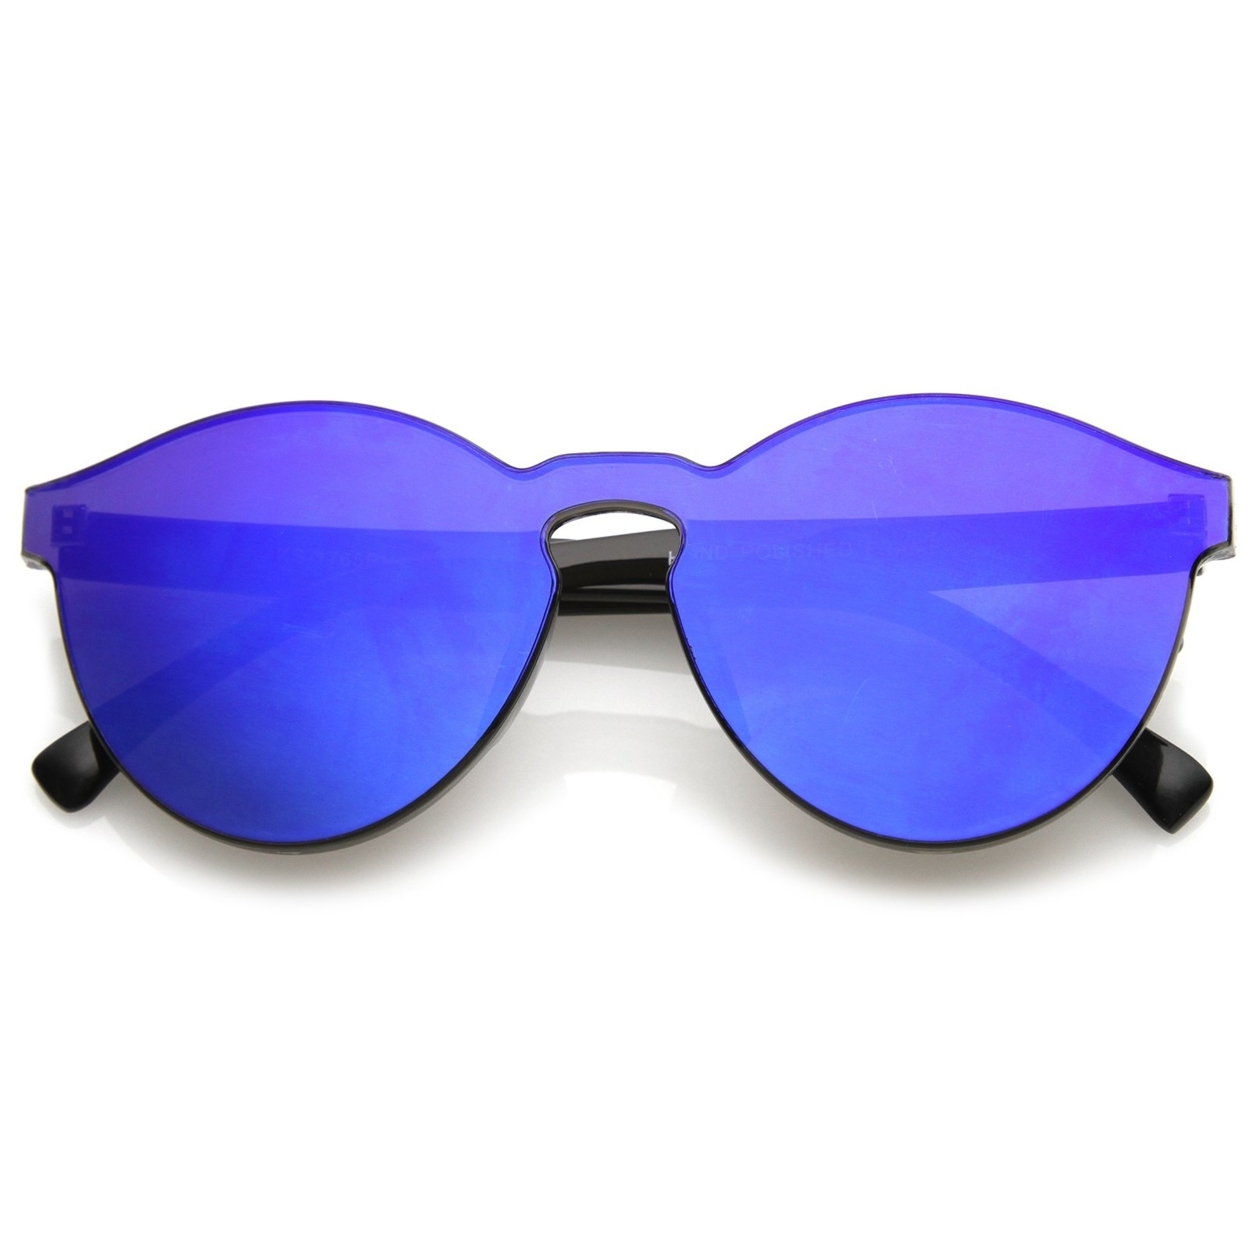 One Piece PC Lens Rimless Ultra-Bold Colored Mirror Mono Block Sunglasses 60mm - Blue Mirror